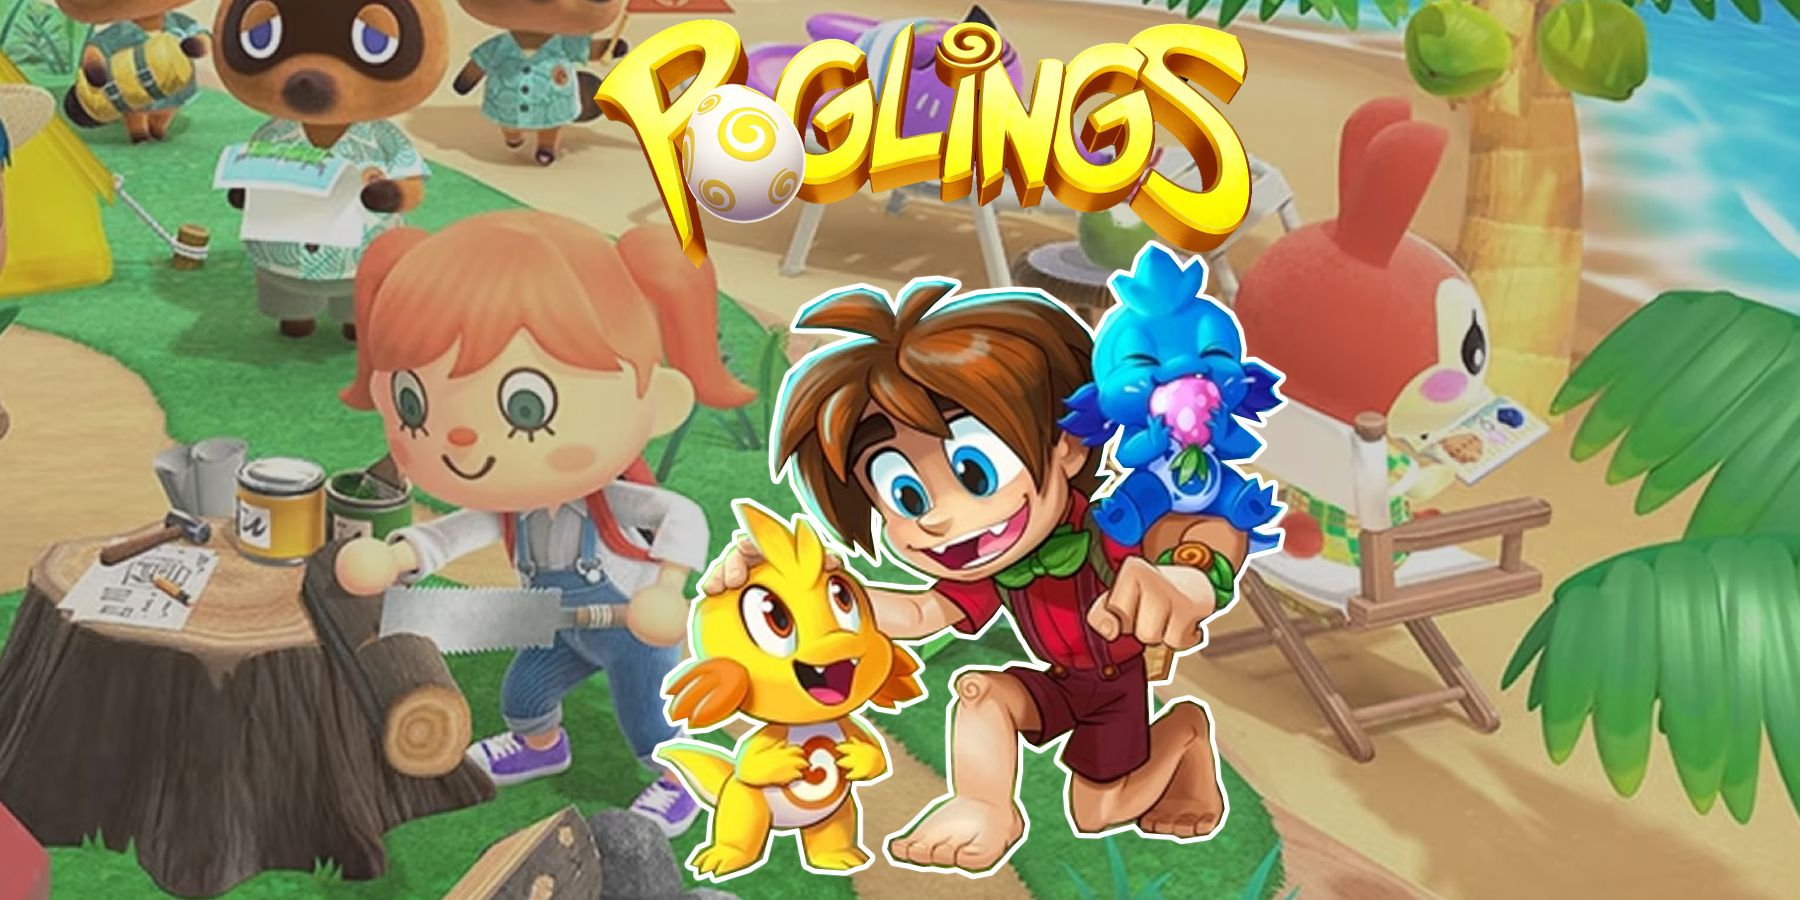 Poglings - A pet sim creature collecting adventure! by Yojoyco